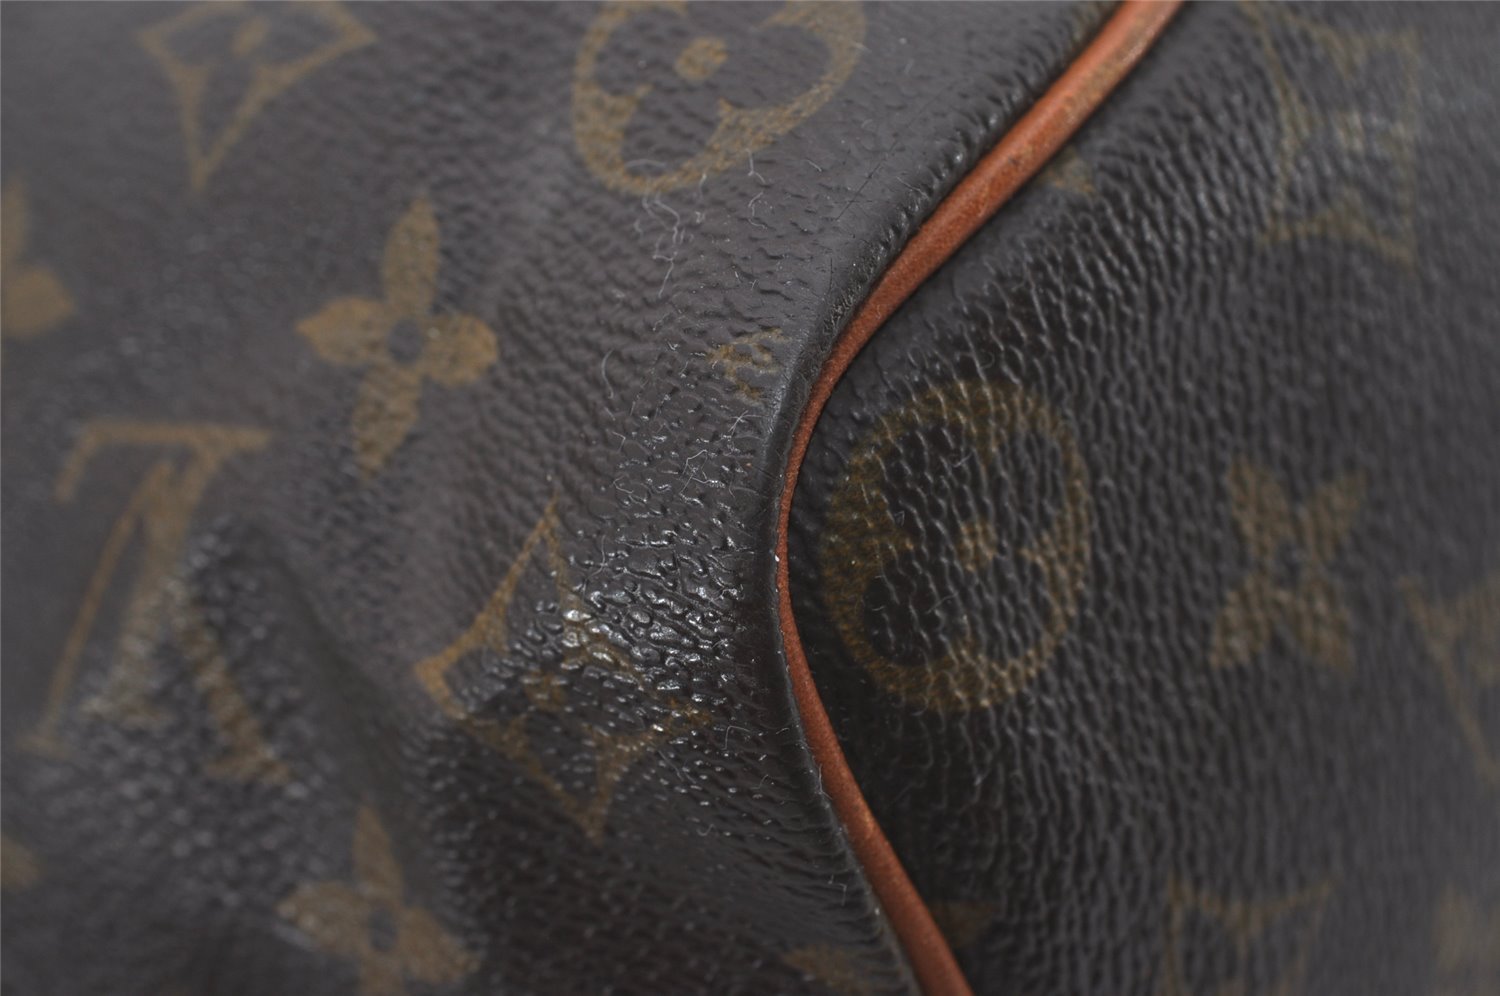 Authentic Louis Vuitton Monogram Speedy 35 Hand Boston Bag M41524 LV Junk 6376I